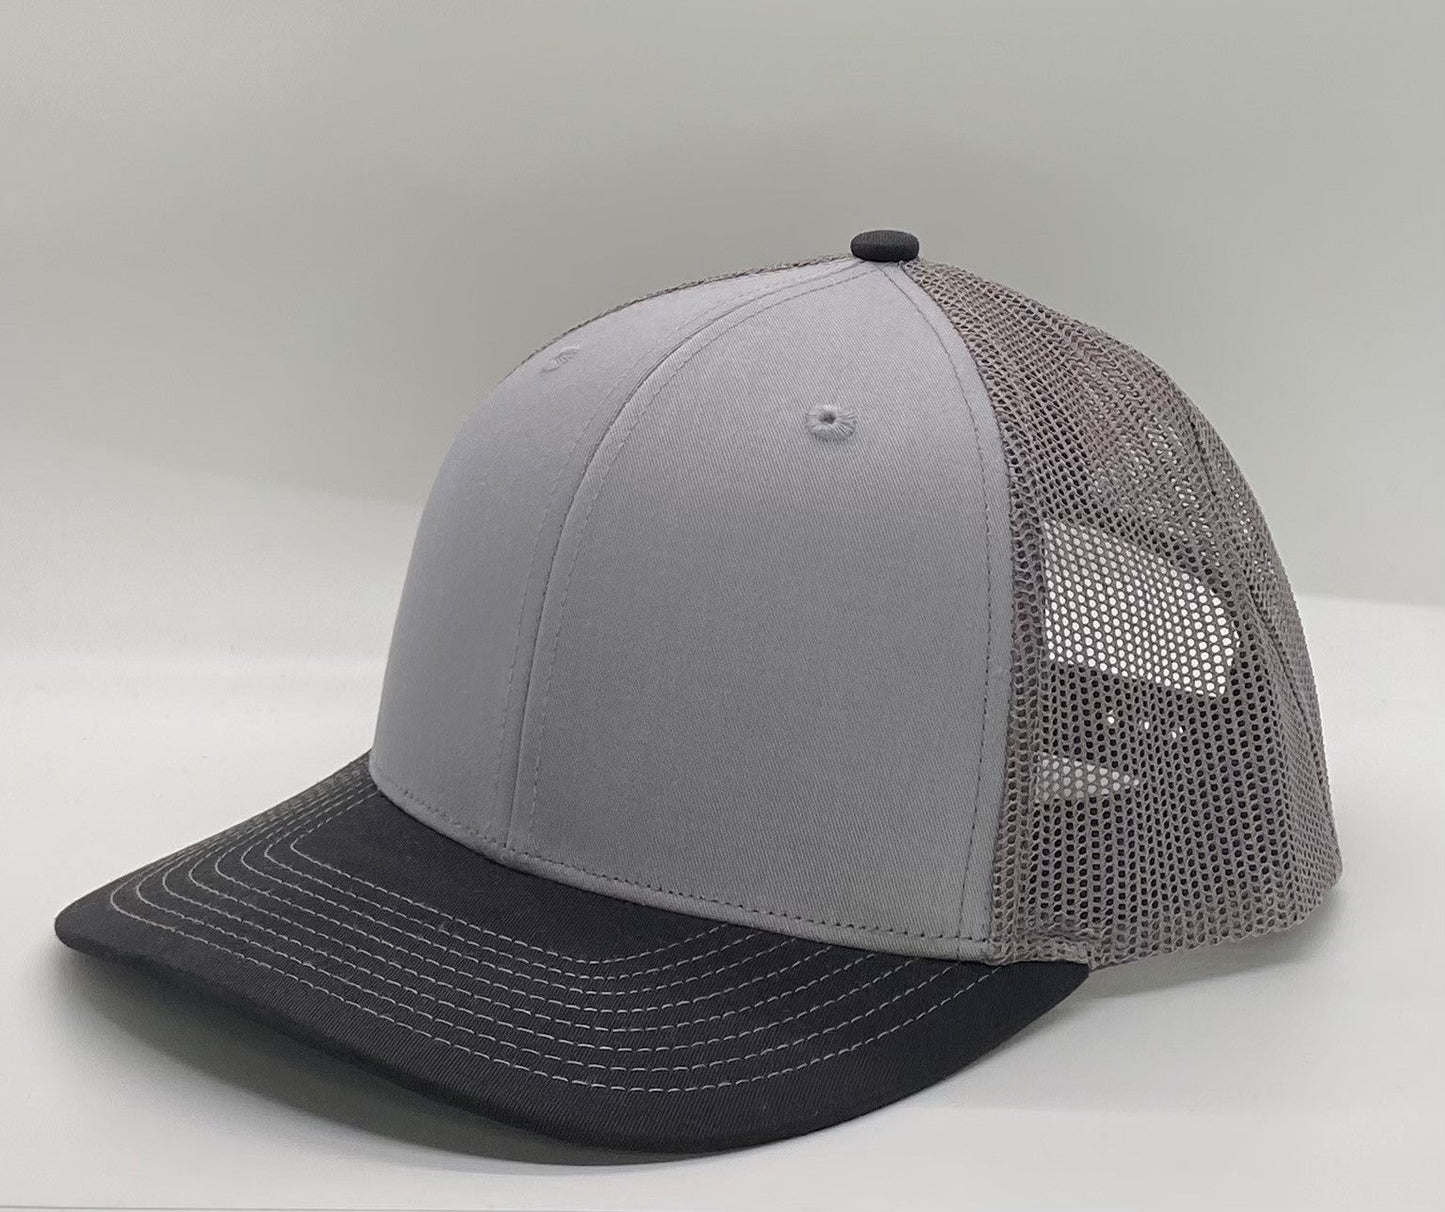 AGA Baseball Girl - Trucker Snapback Hat + Flex Fit Option